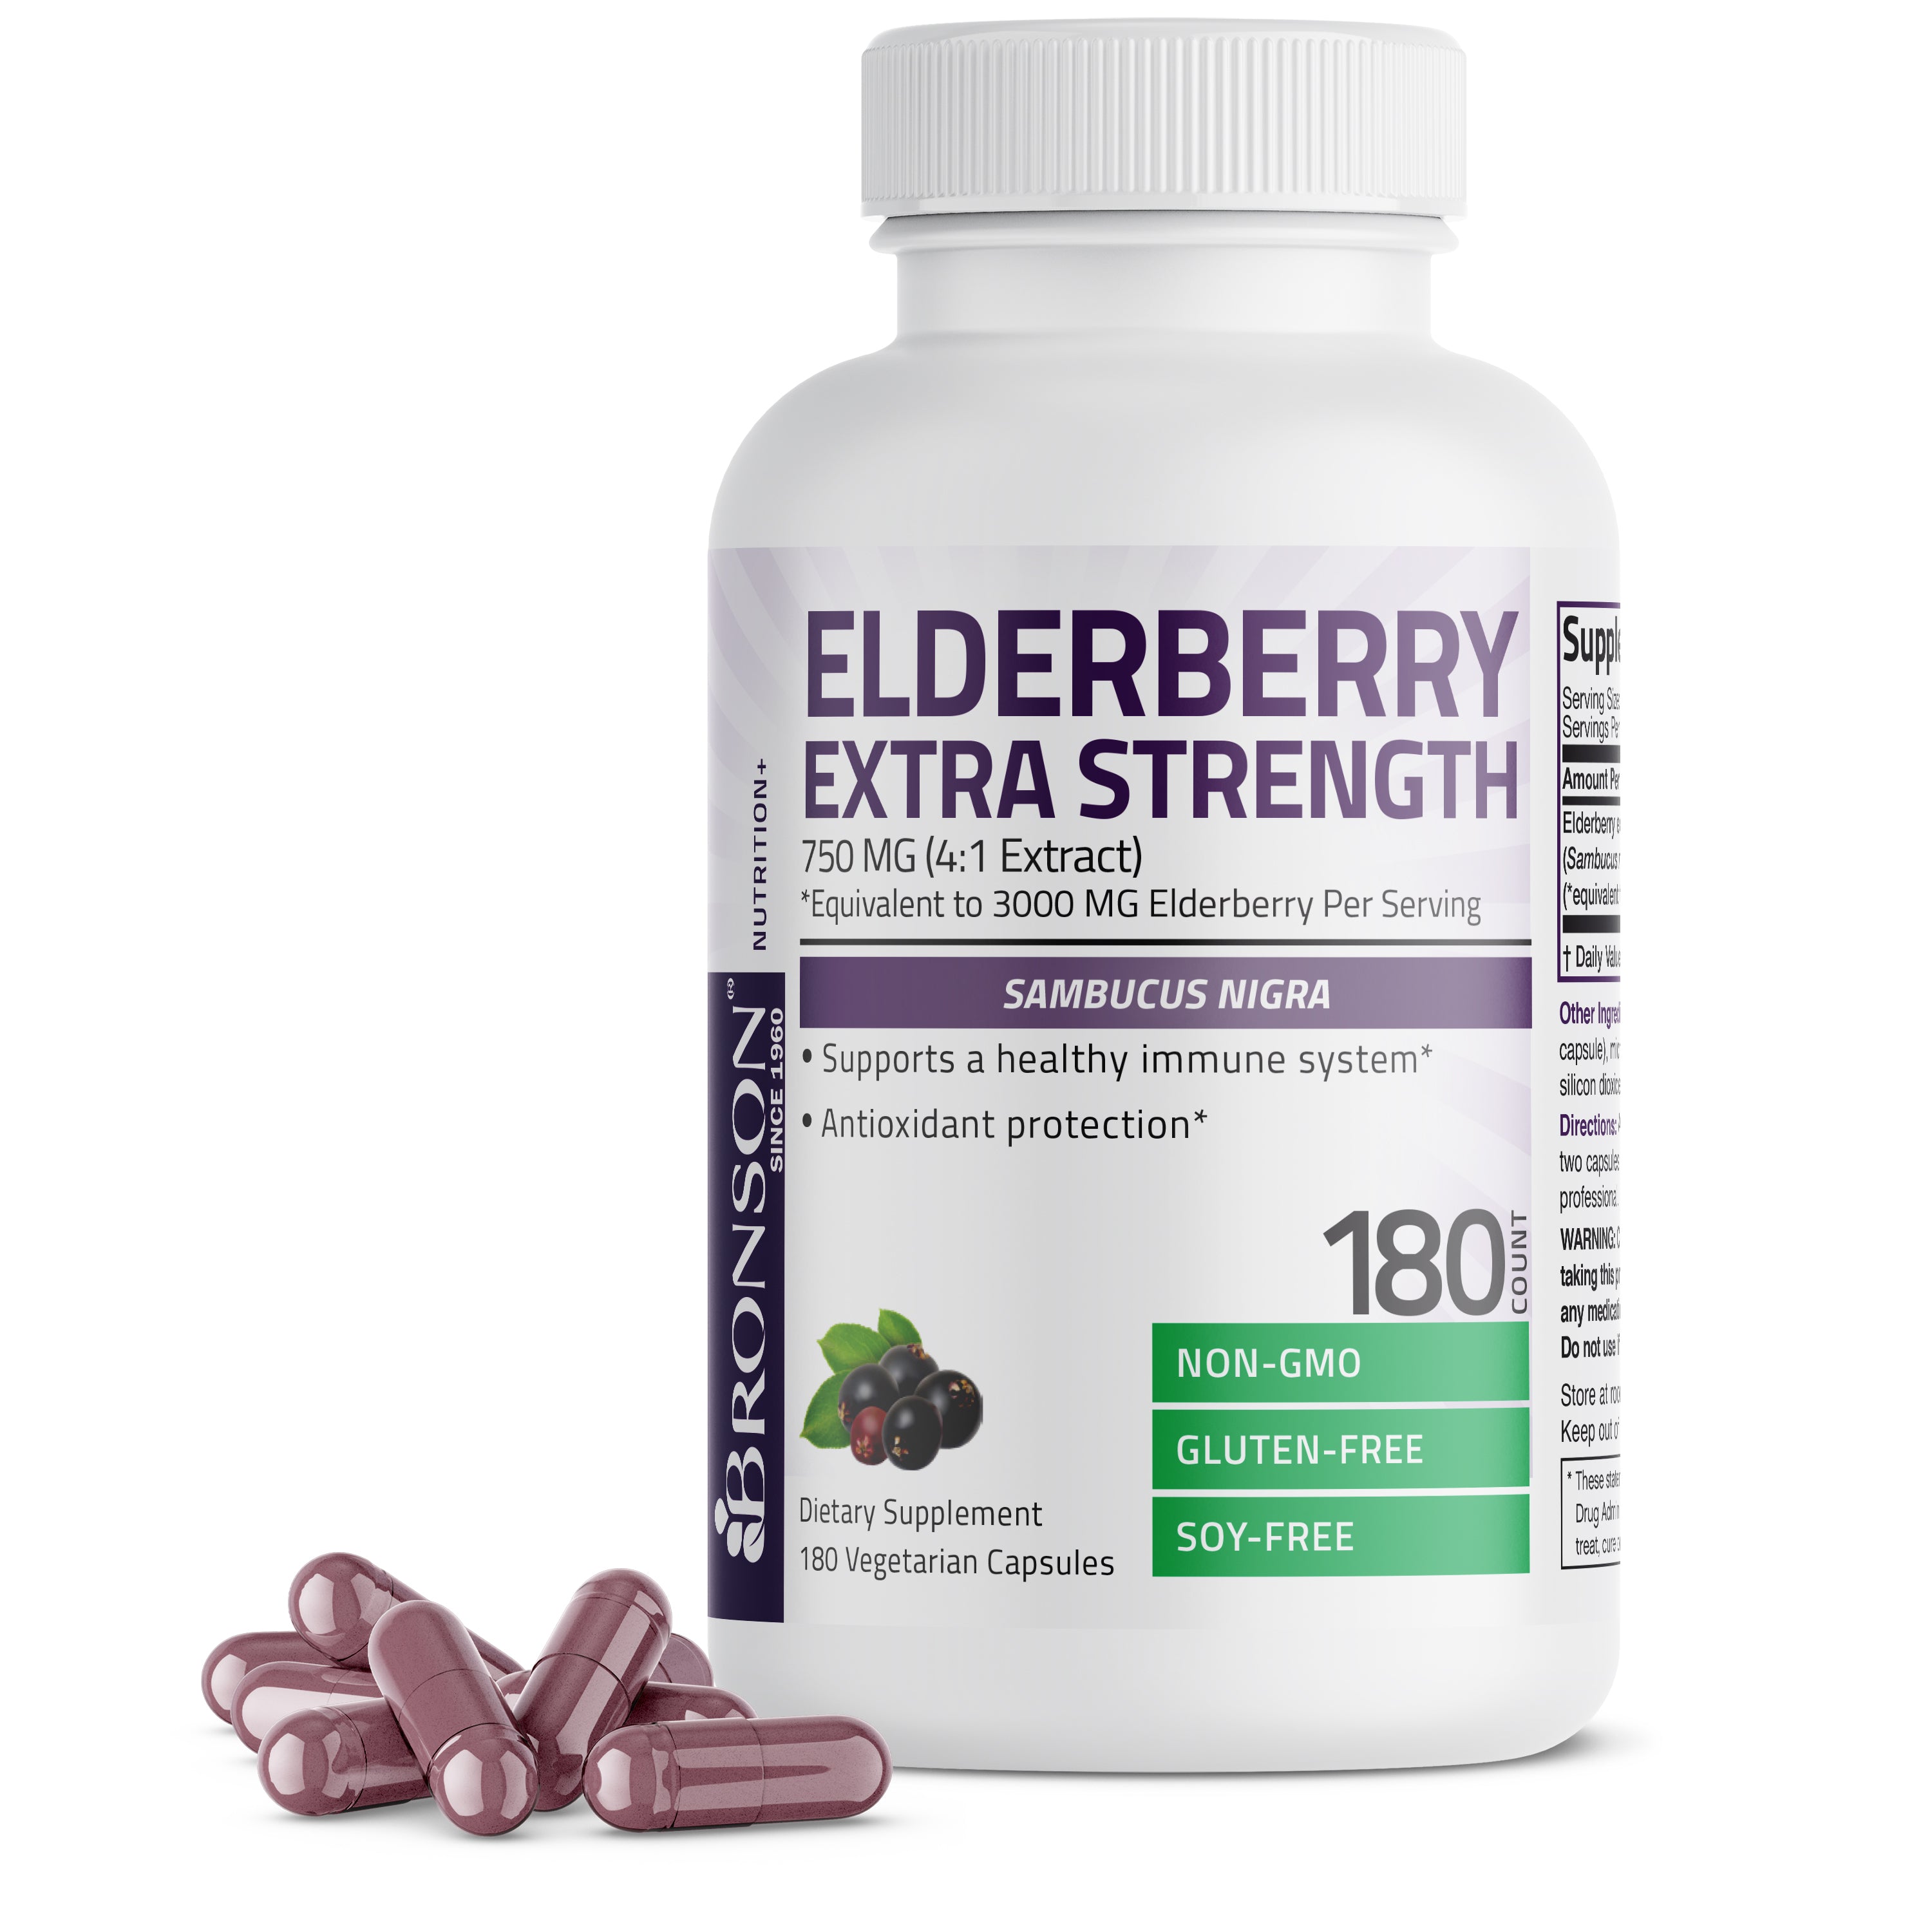 Elderberry Extra Strength - 3,000 mg - 180 Vegetarian Capsules view 1 of 7